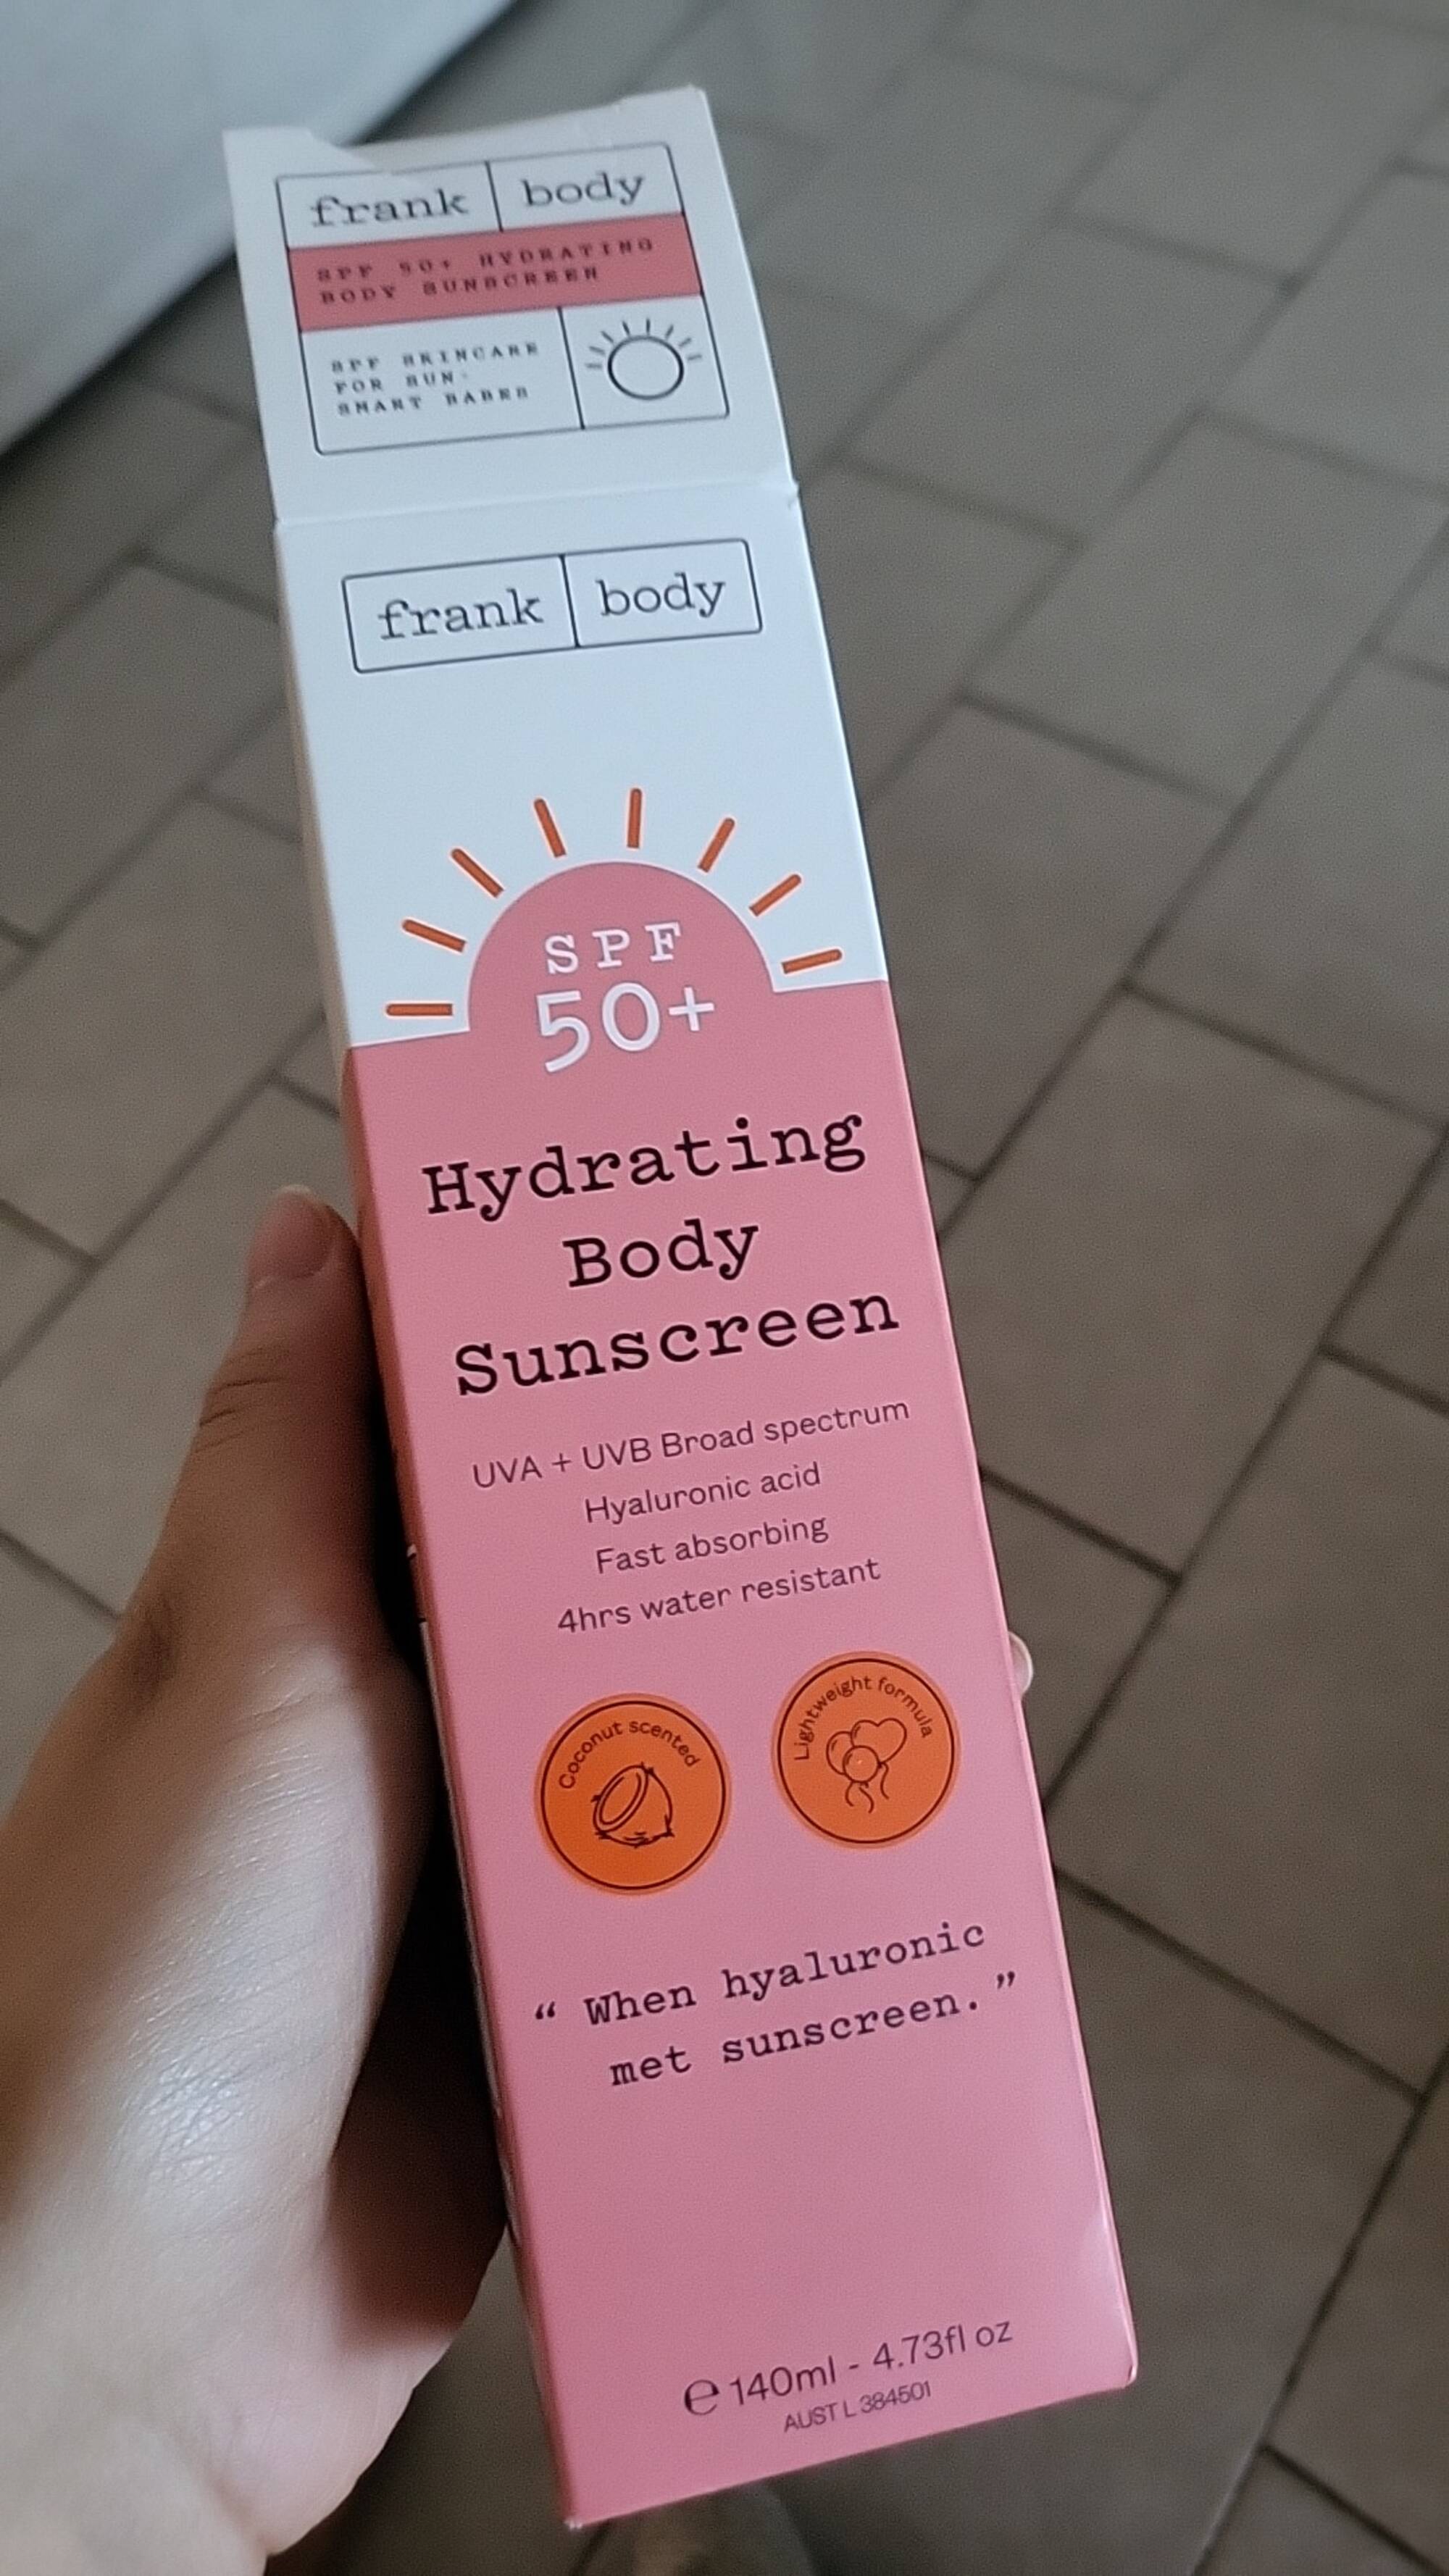 FRANK BODY - Hydrating body sunscreen SPF 50+